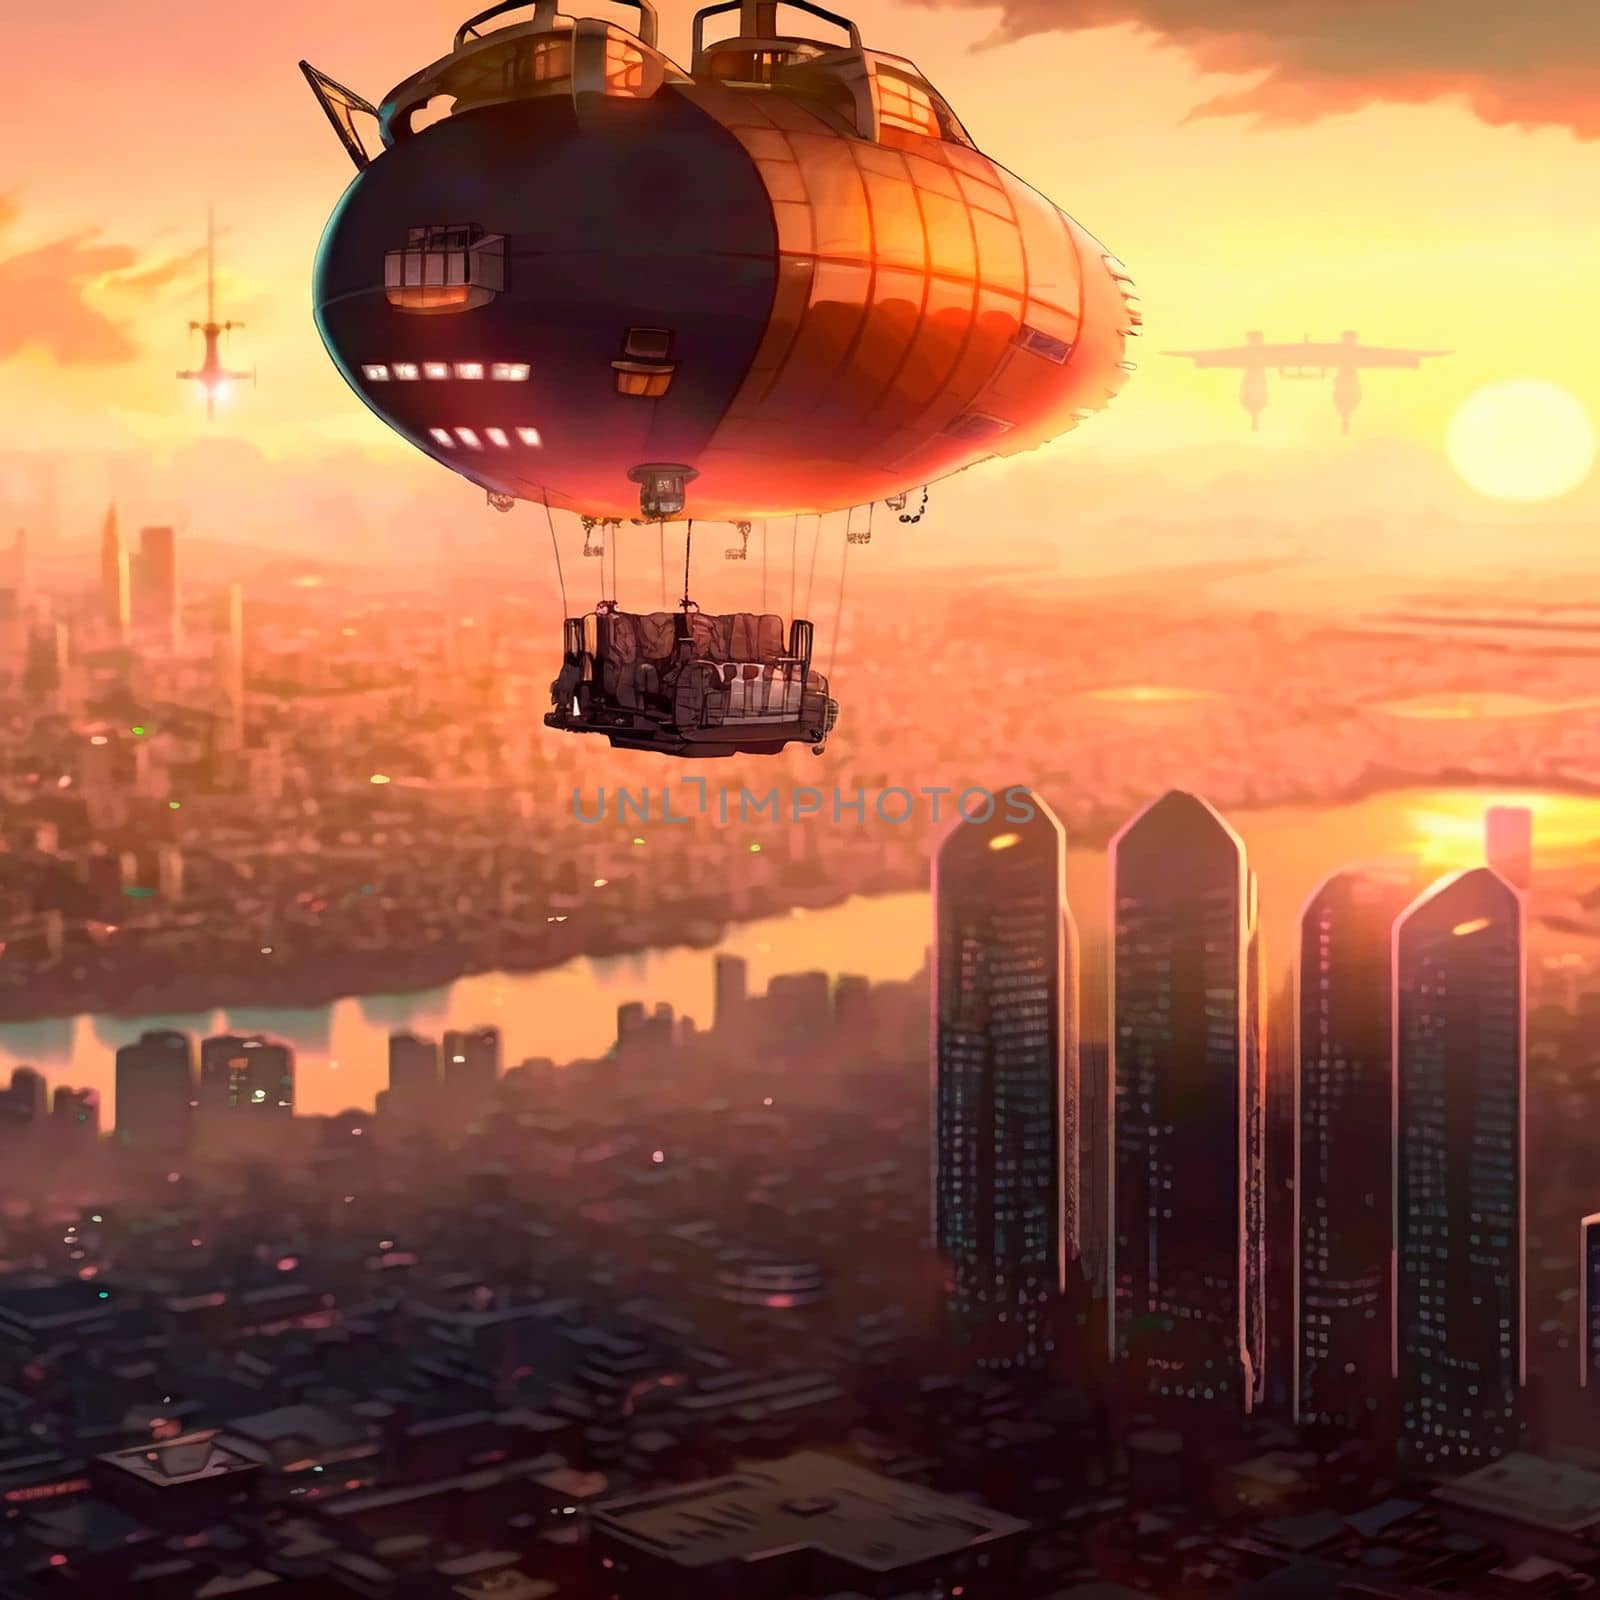 Steampunk airship flies over a modern city by NeuroSky